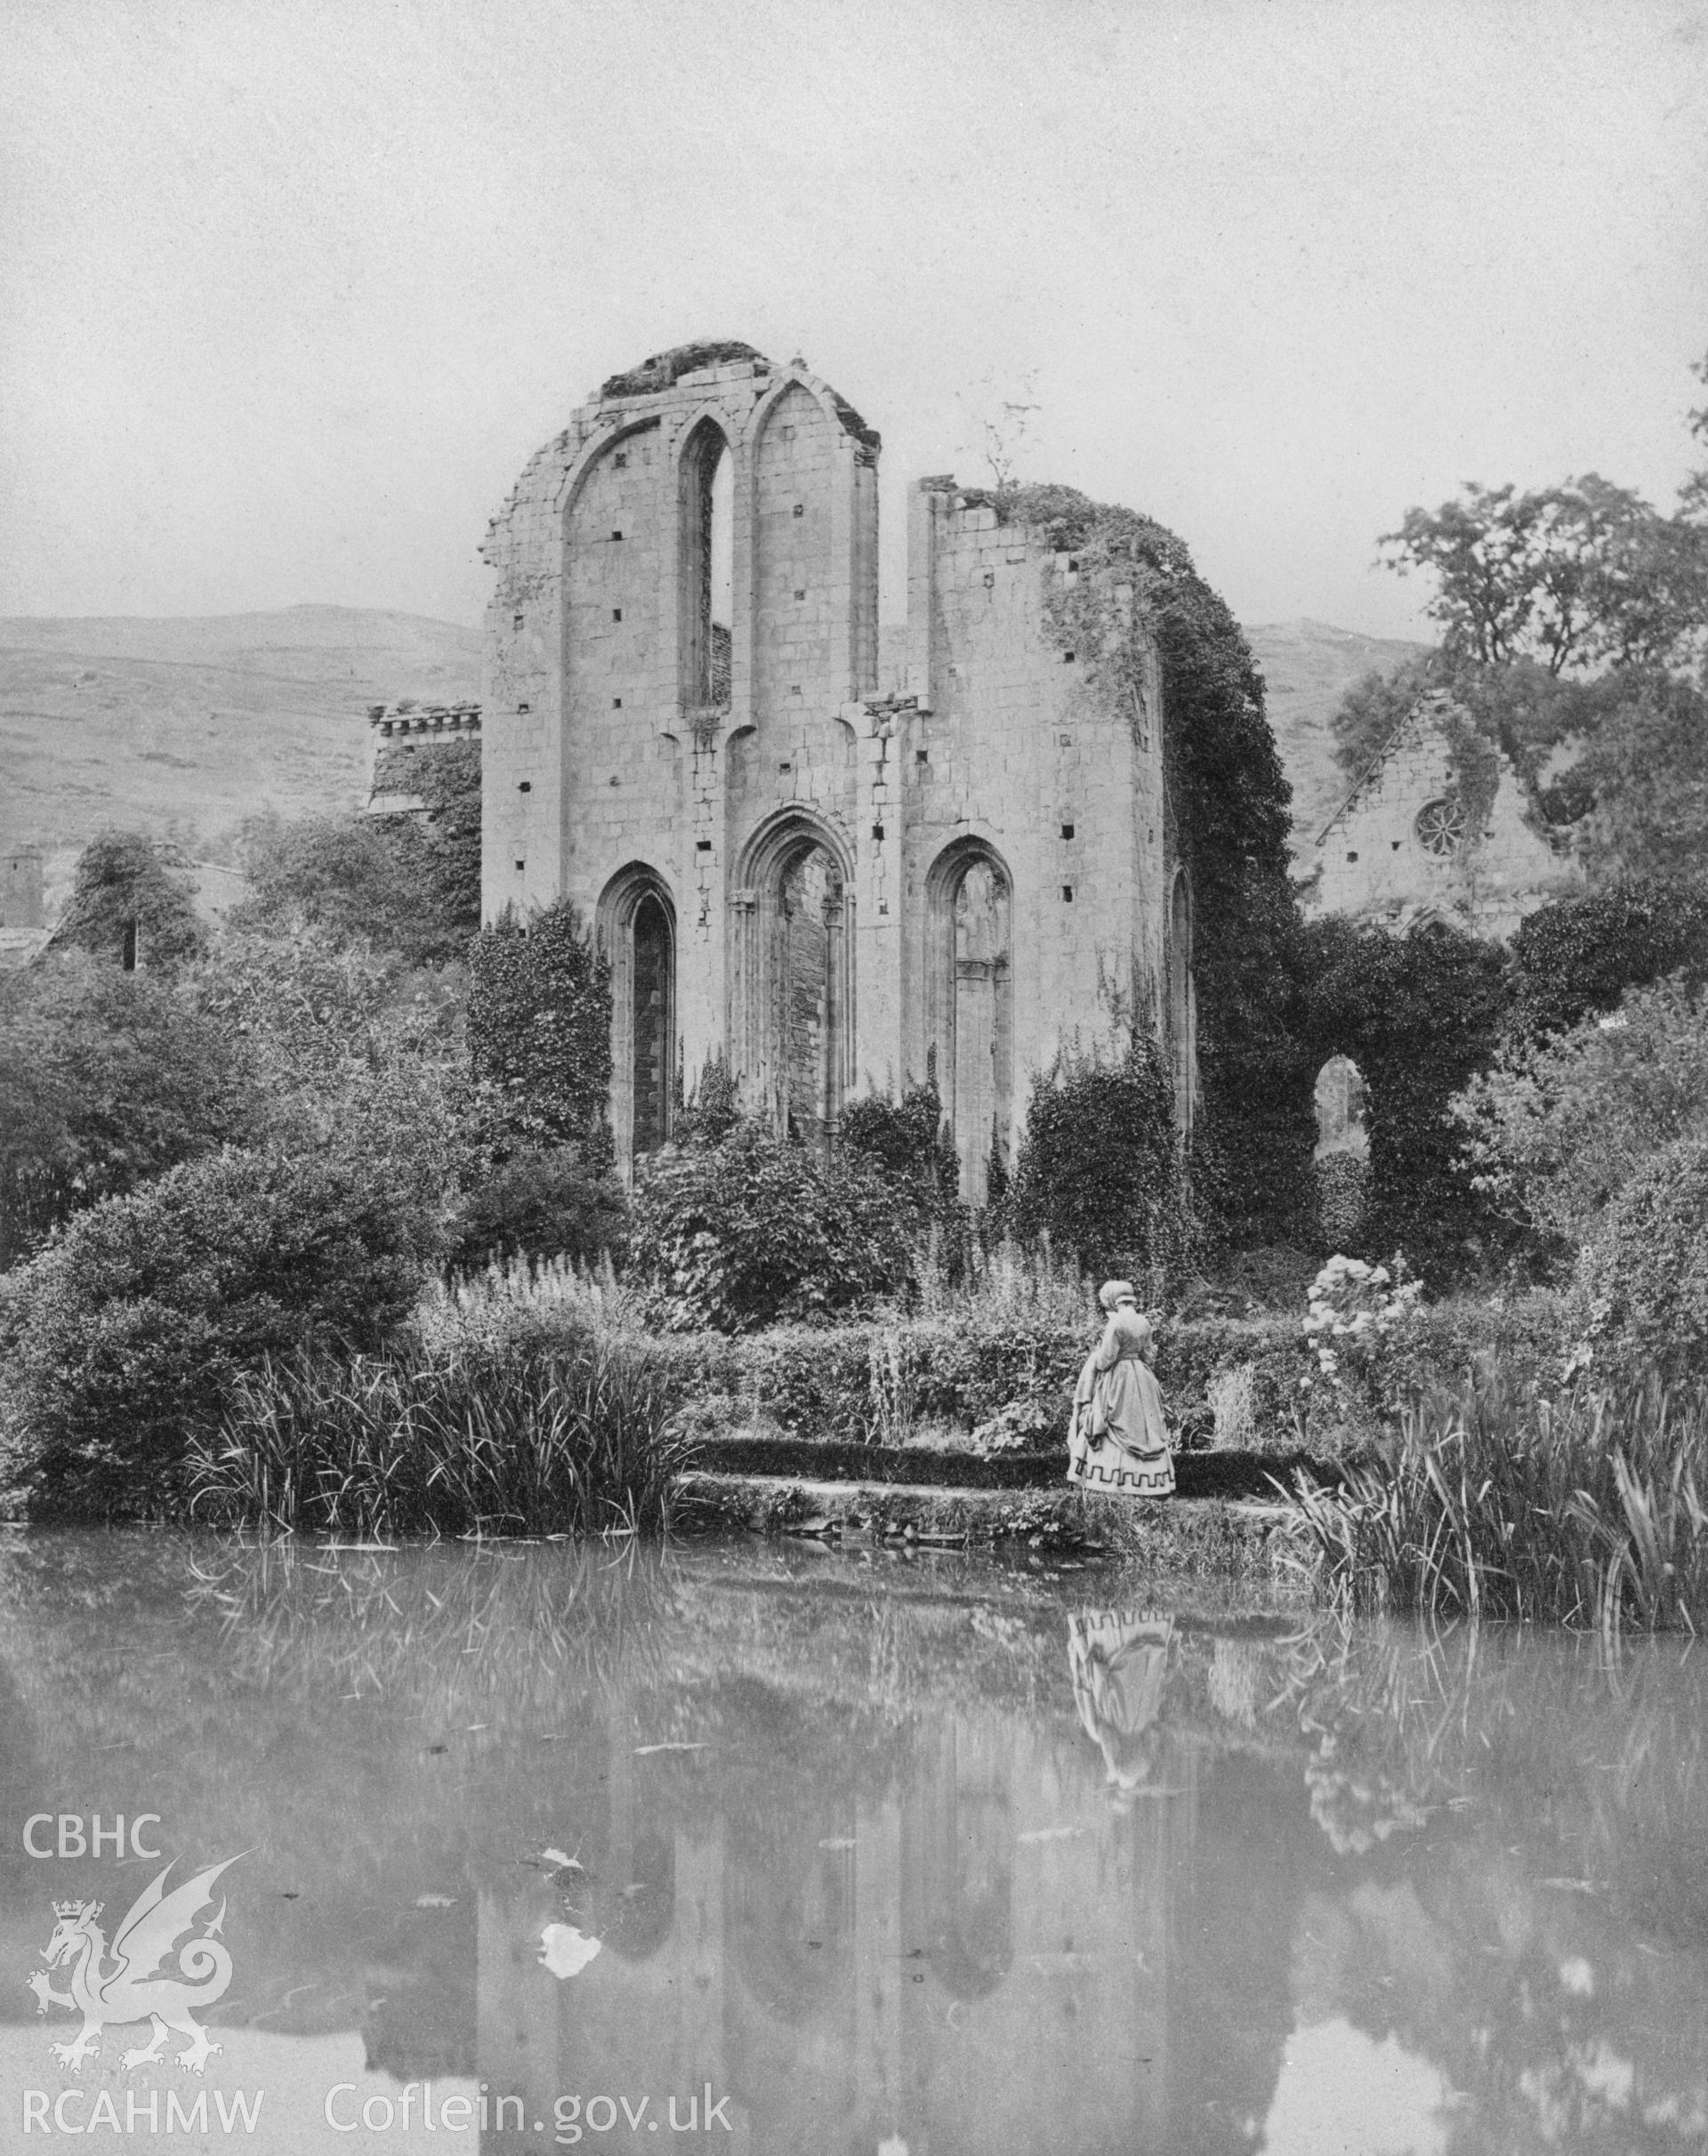 Digital copy of an acetate negative showing Valle Crucis Abbey, near Llangollen.